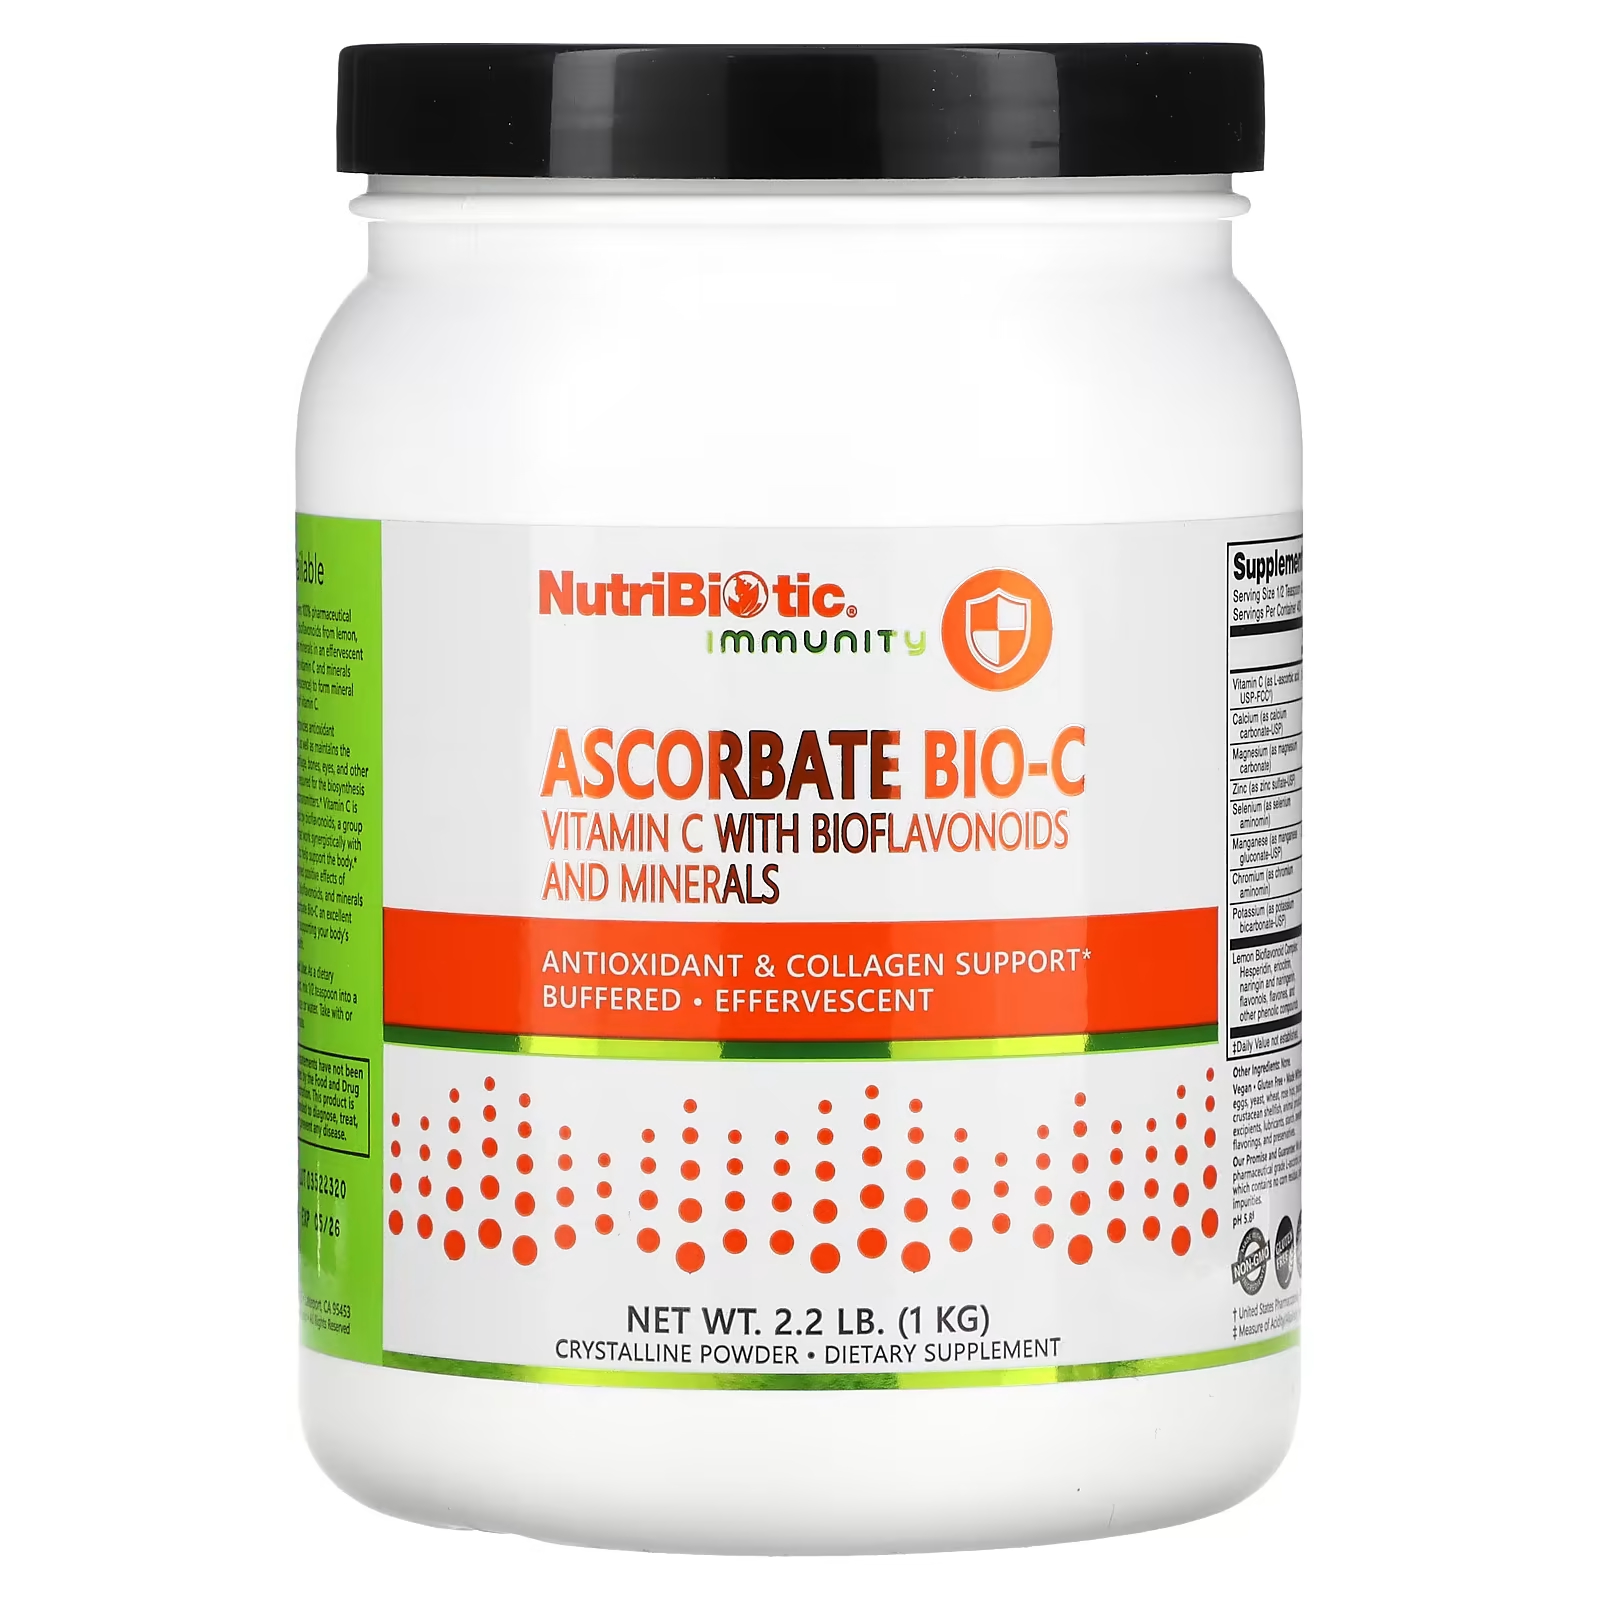 NutriBiotic Immunity Ascorbate Bio-C Витамин C с биофлавоноидами и минералами 2,2 фунта (1 кг) nutribiotic immunity аскорбиновая кислота с биофлавоноидами 2 2 фунта 1 кг